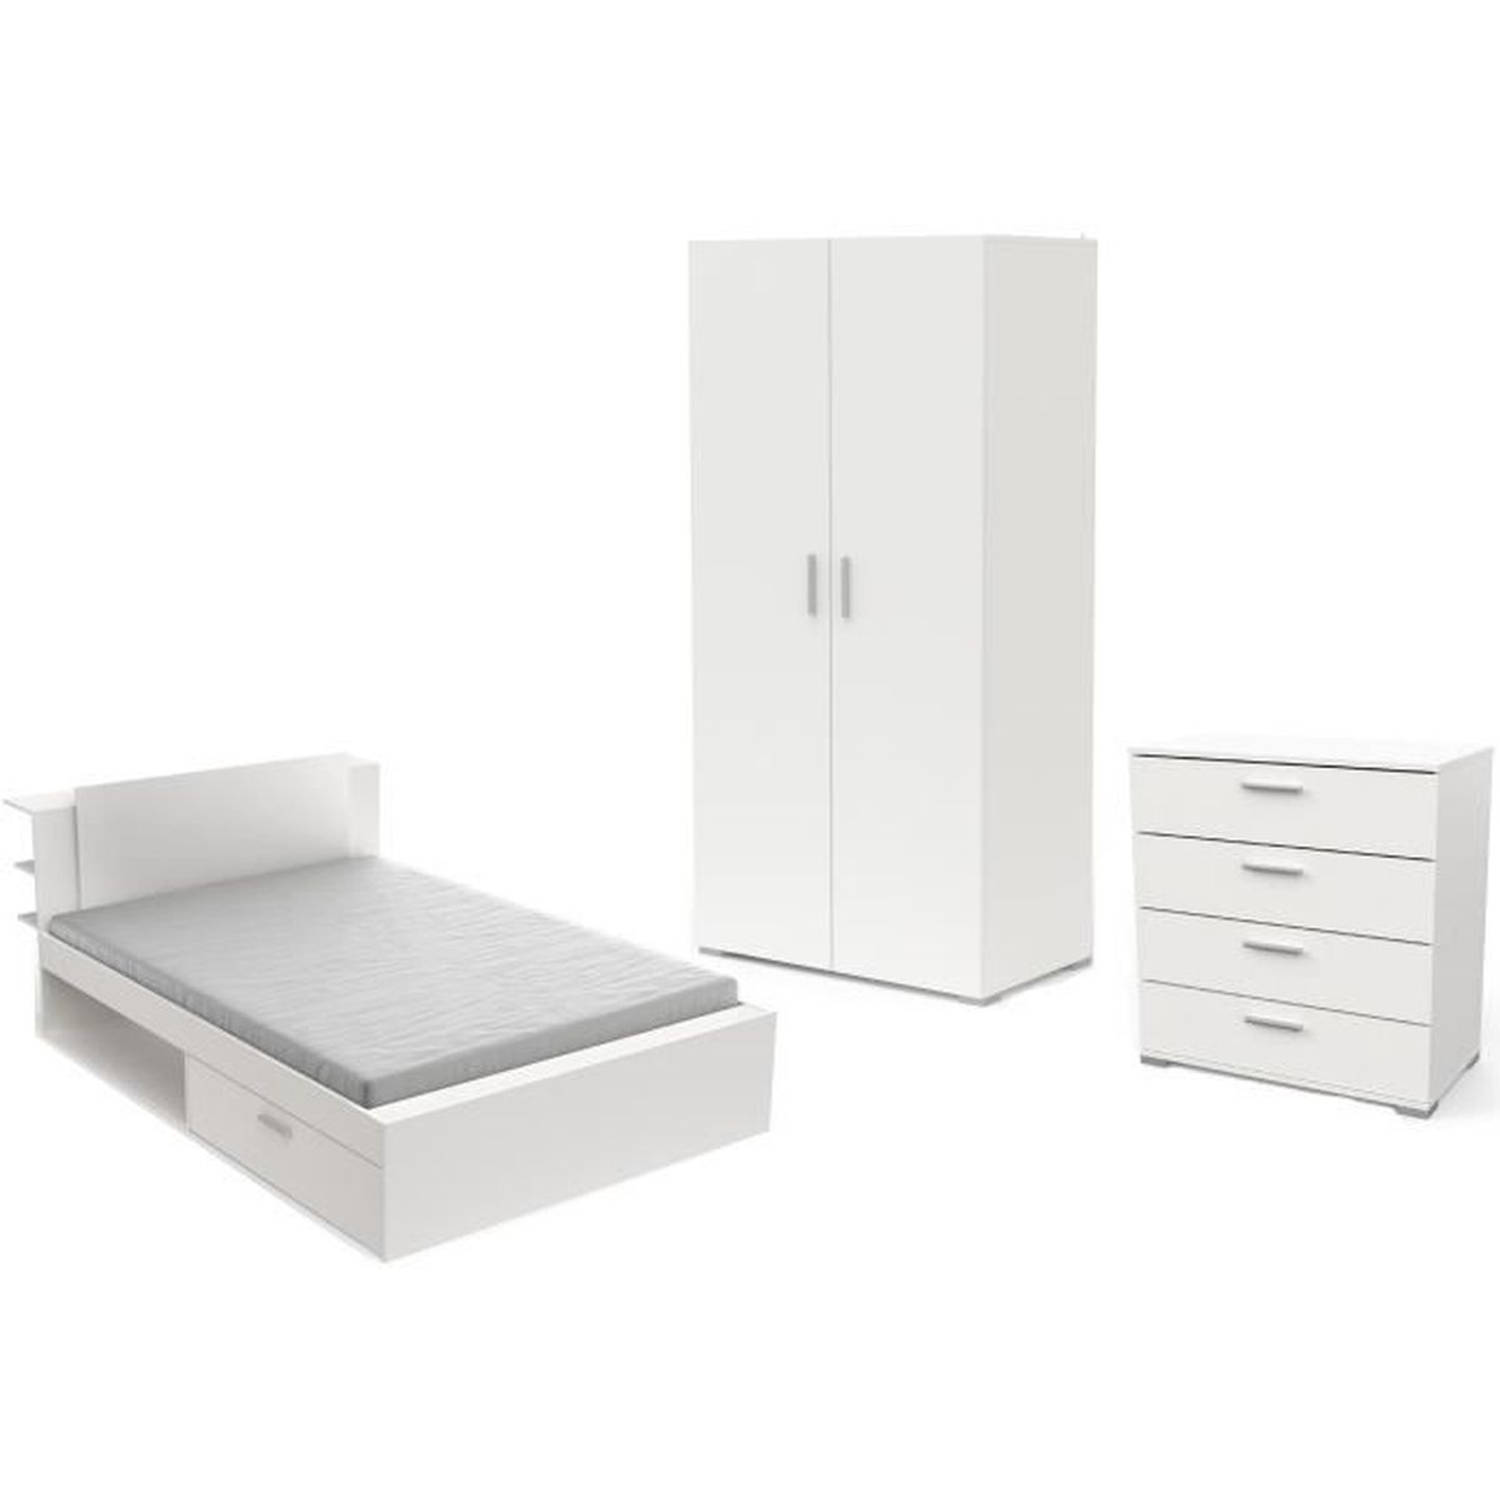 Volledige volwassen slaapkamer LIFE - Bed + Ladekast + Kleerkast - Wit decor - DEMEYERE - Made in France